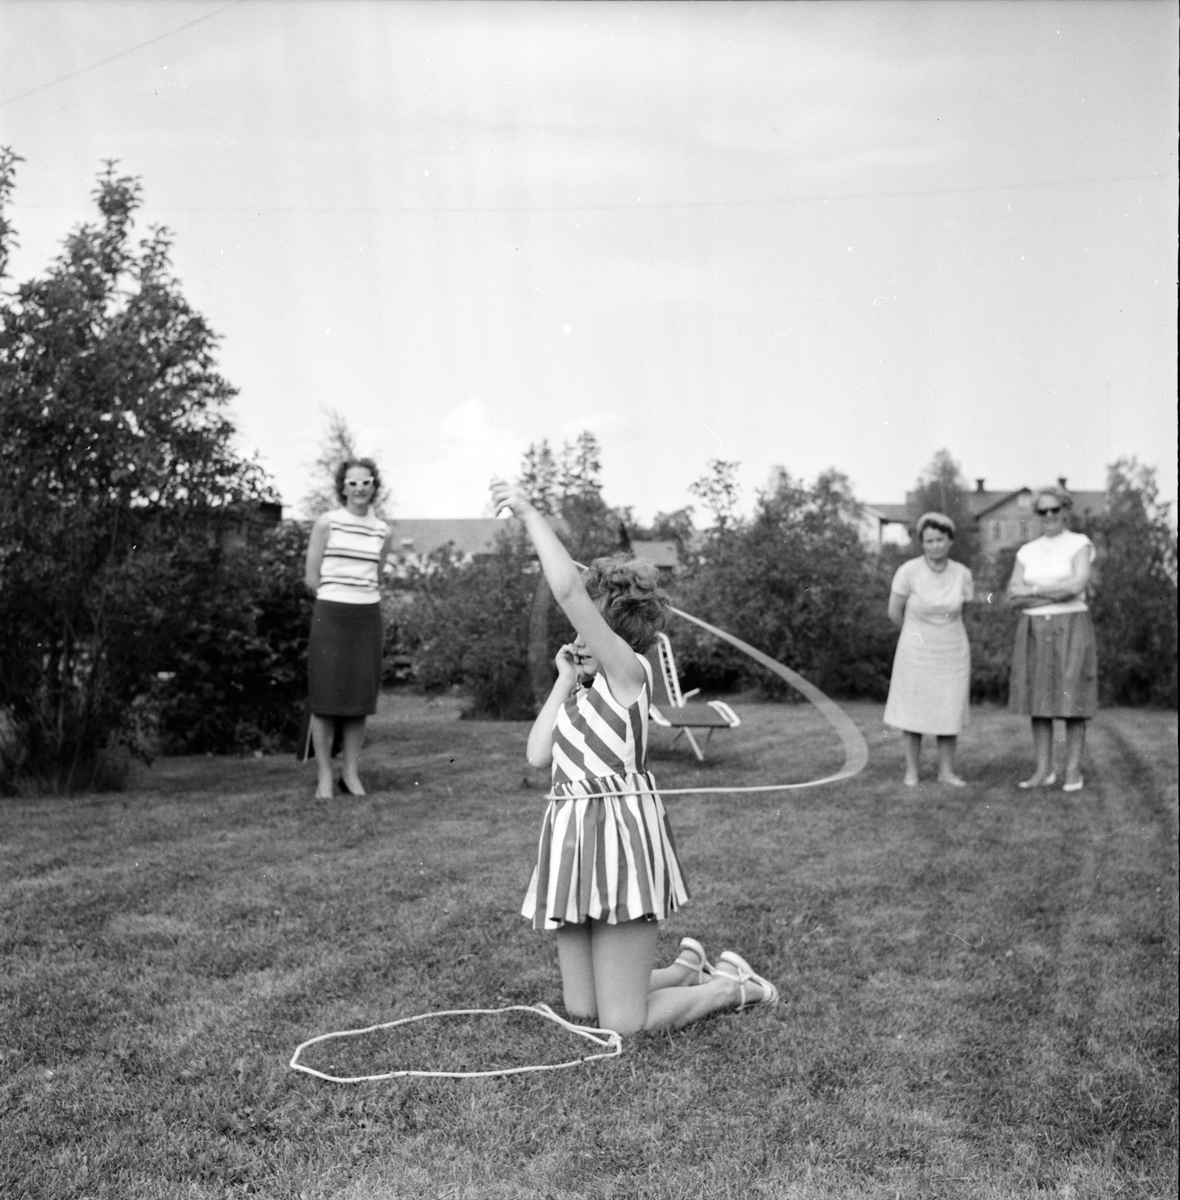 Wasabarn fr. USA,
Mrs Eva Rae Briscoe, Portland, Oreg,
Anna & Ruben Haglund Södertälje,
9 Augusti 1964